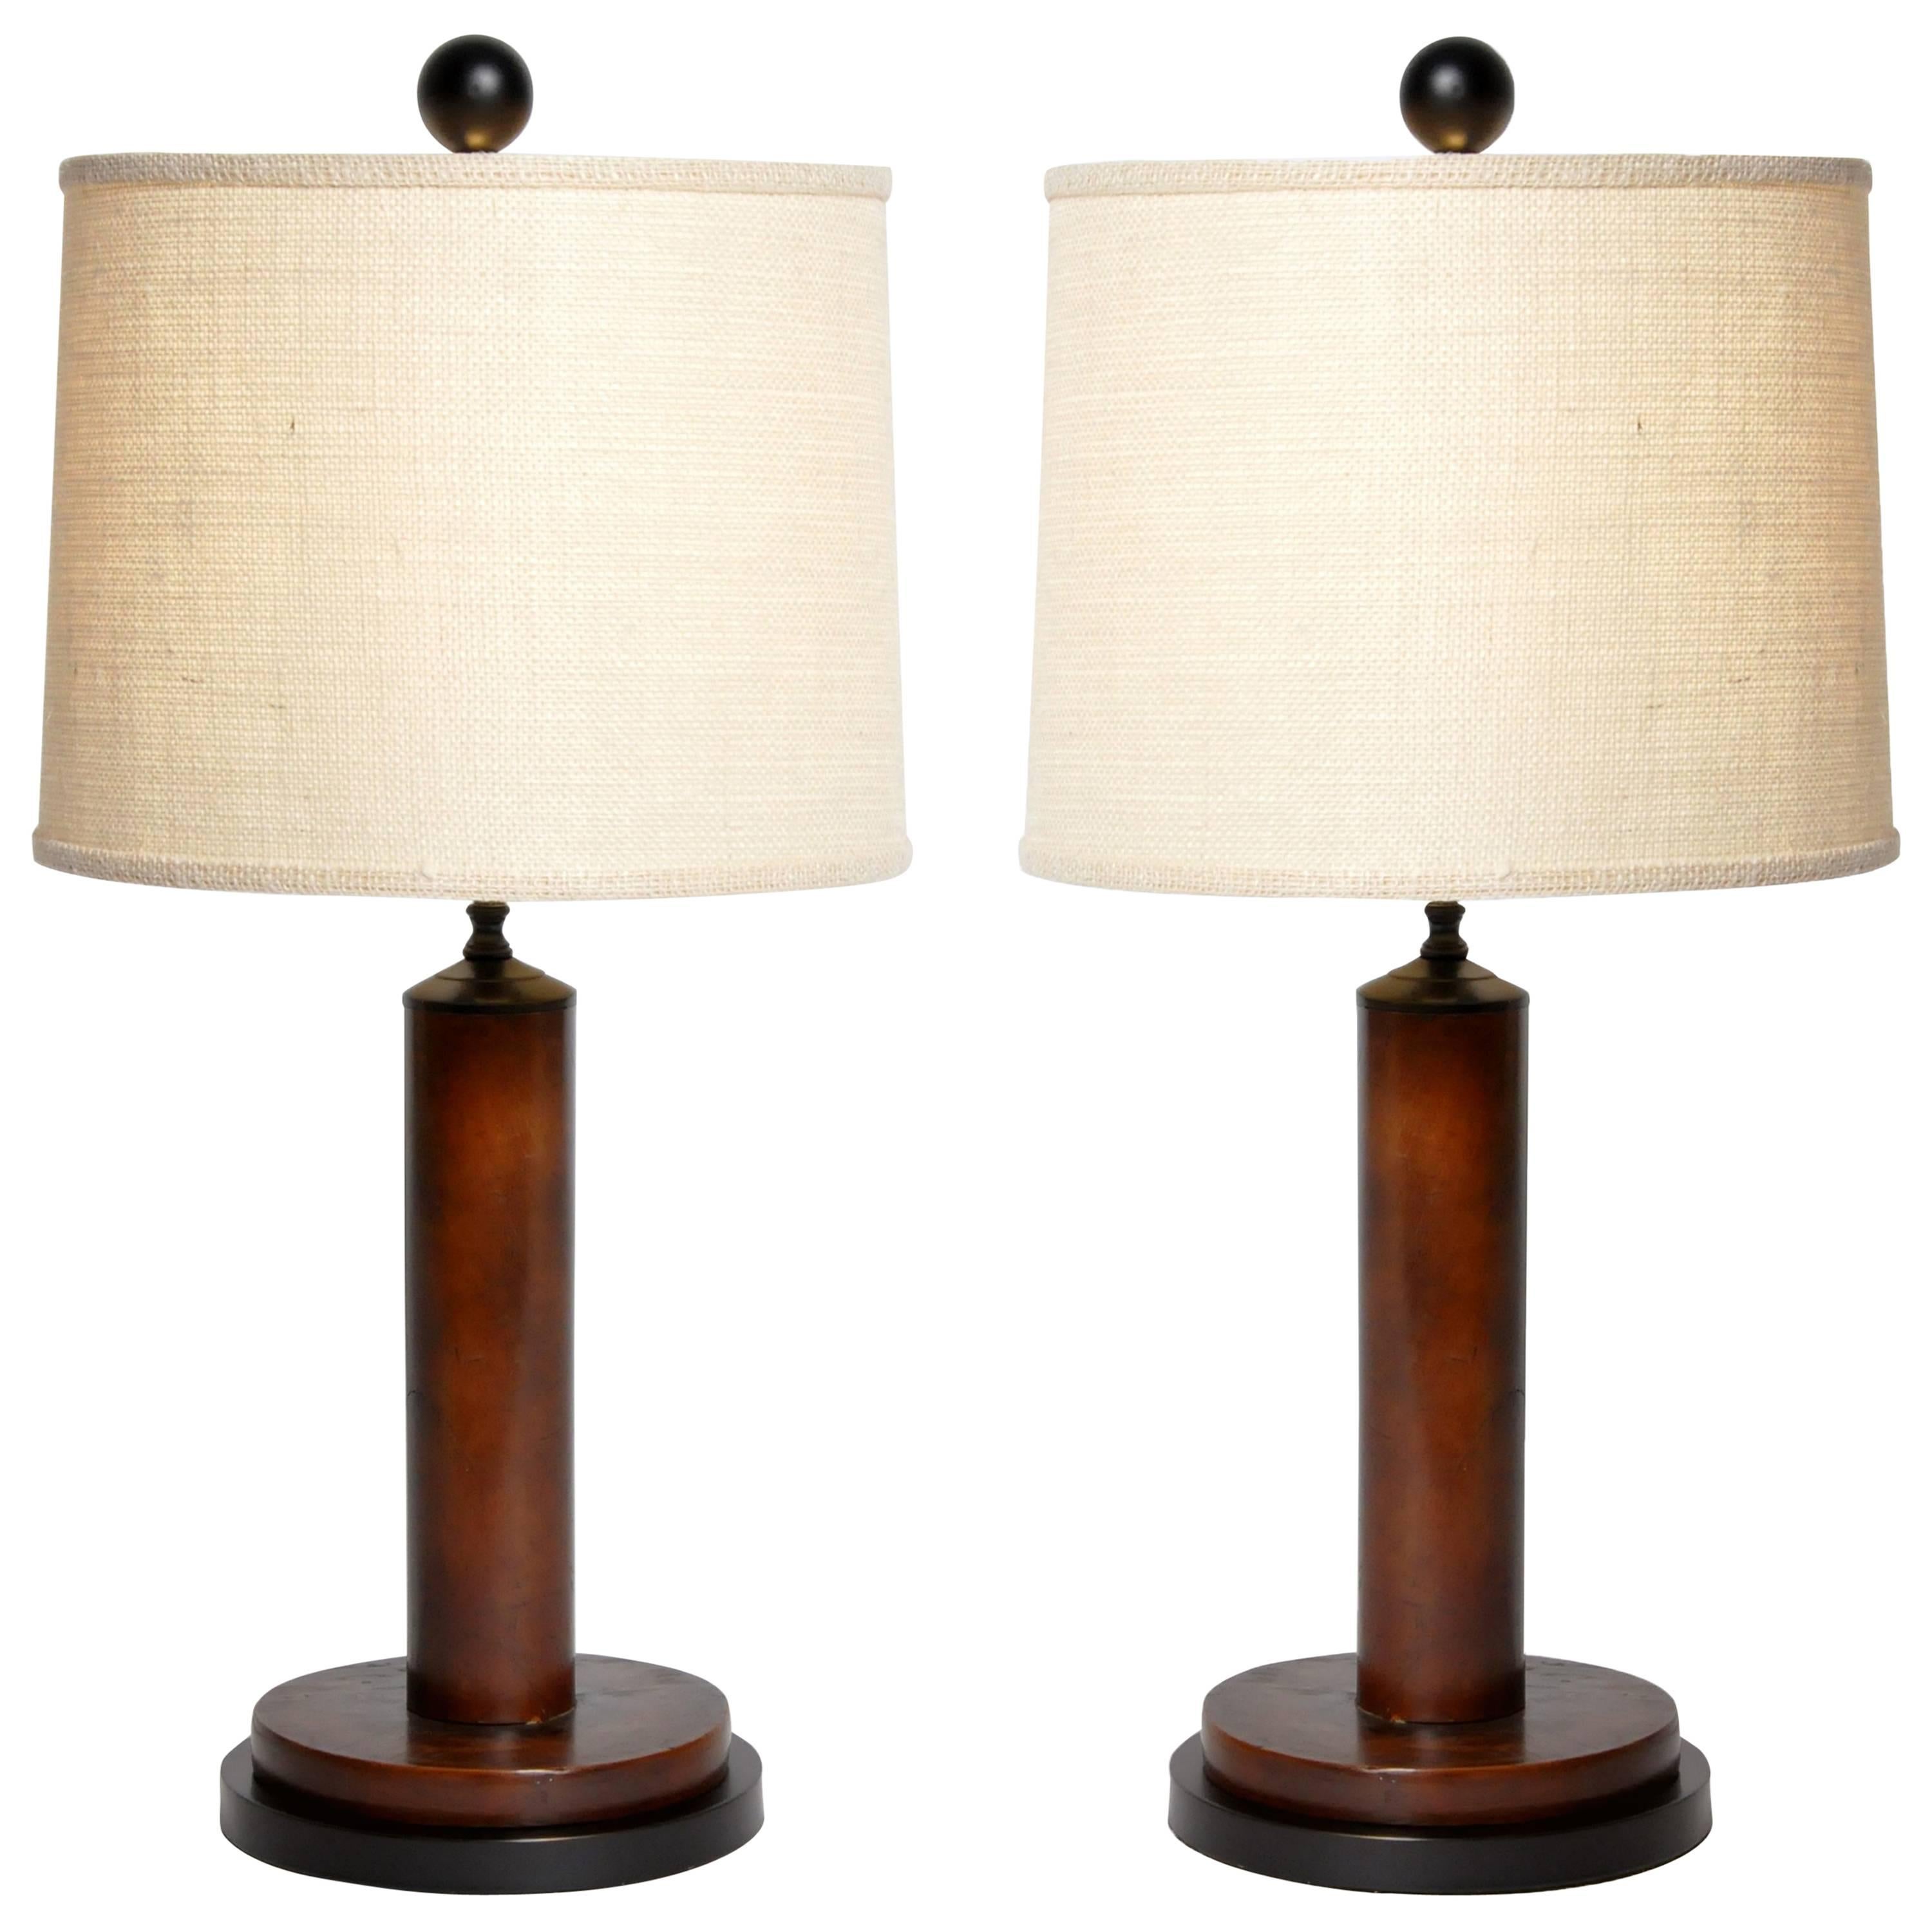 Pair of British Colonial Lamps